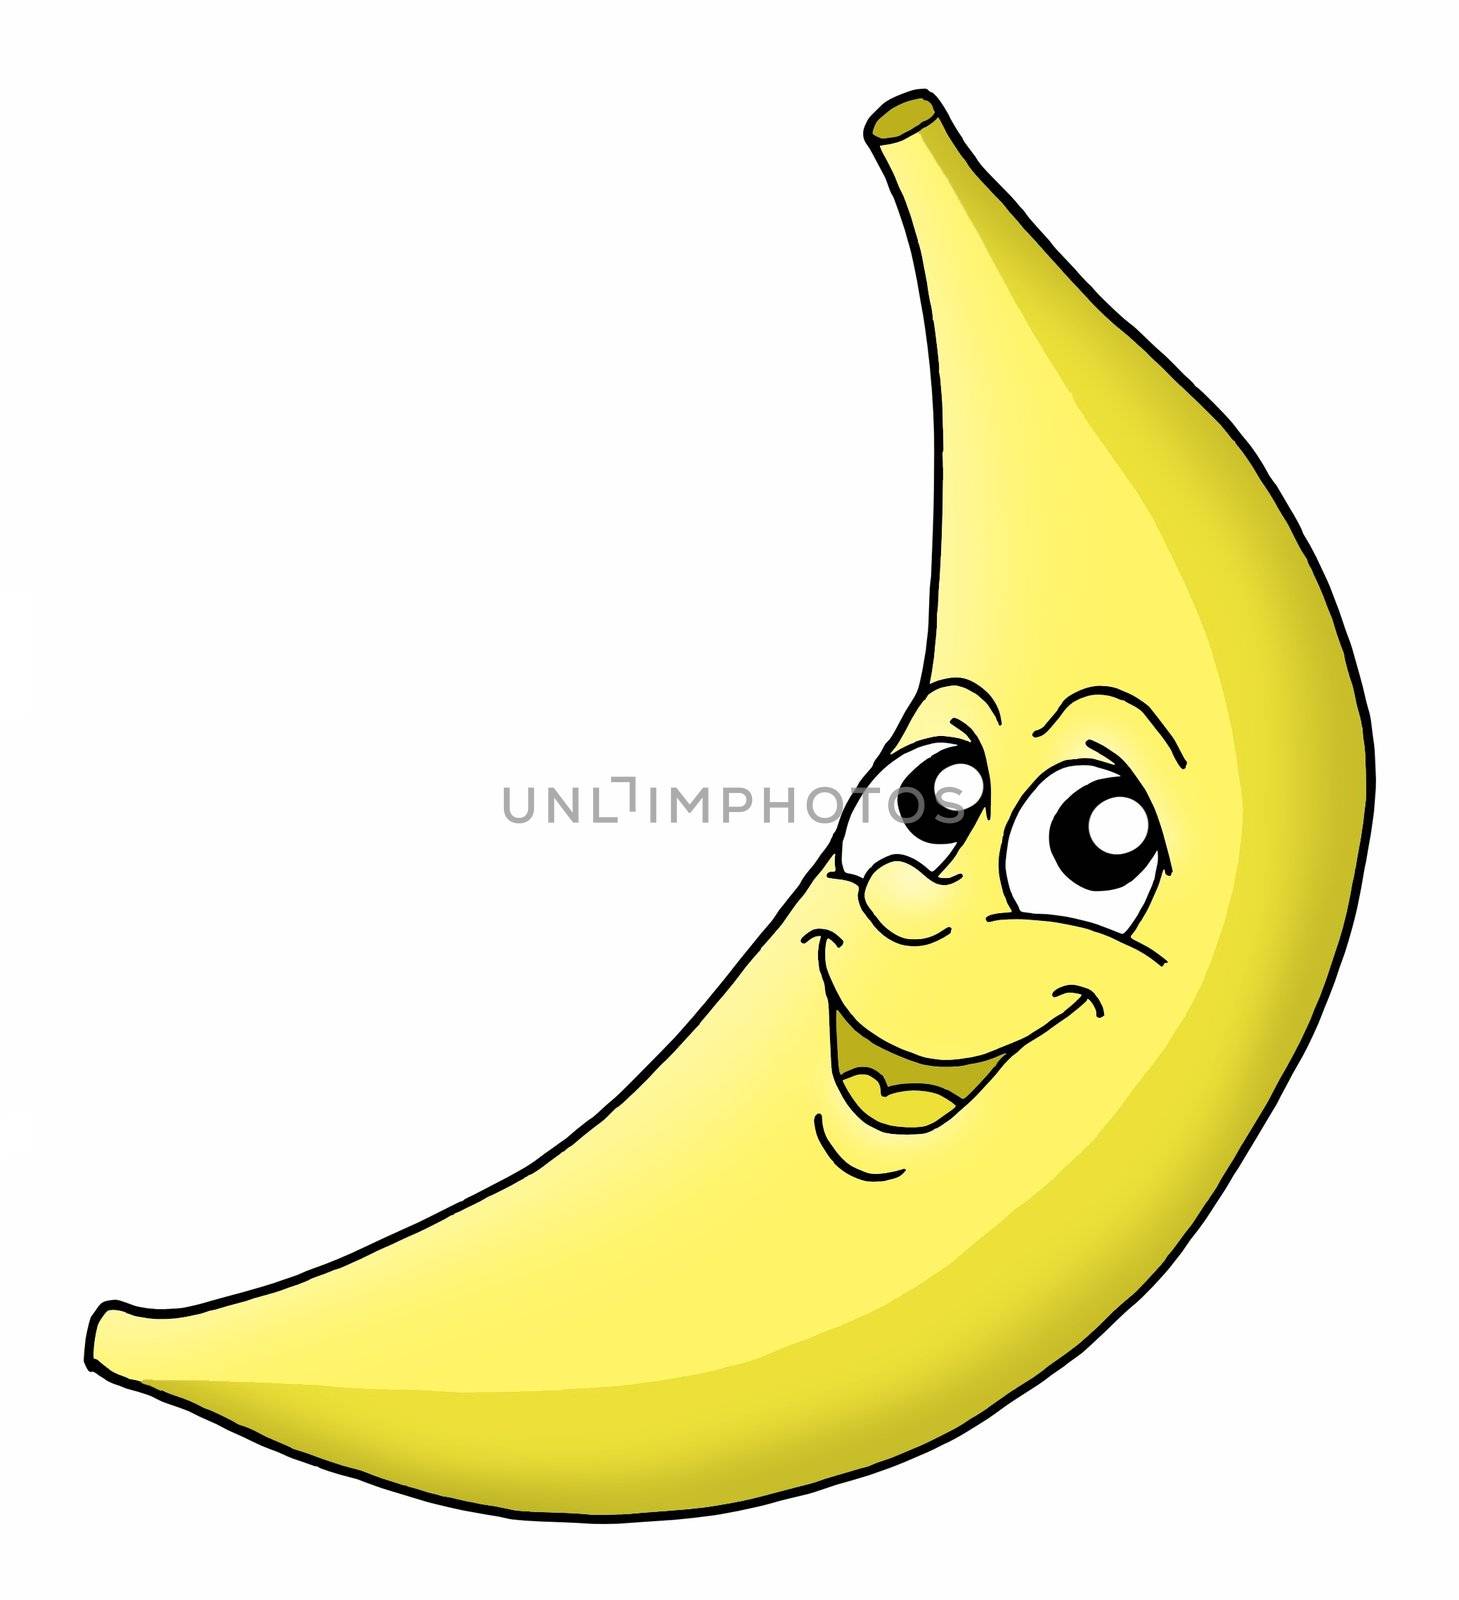 Smiling yellow banana - color illustration.